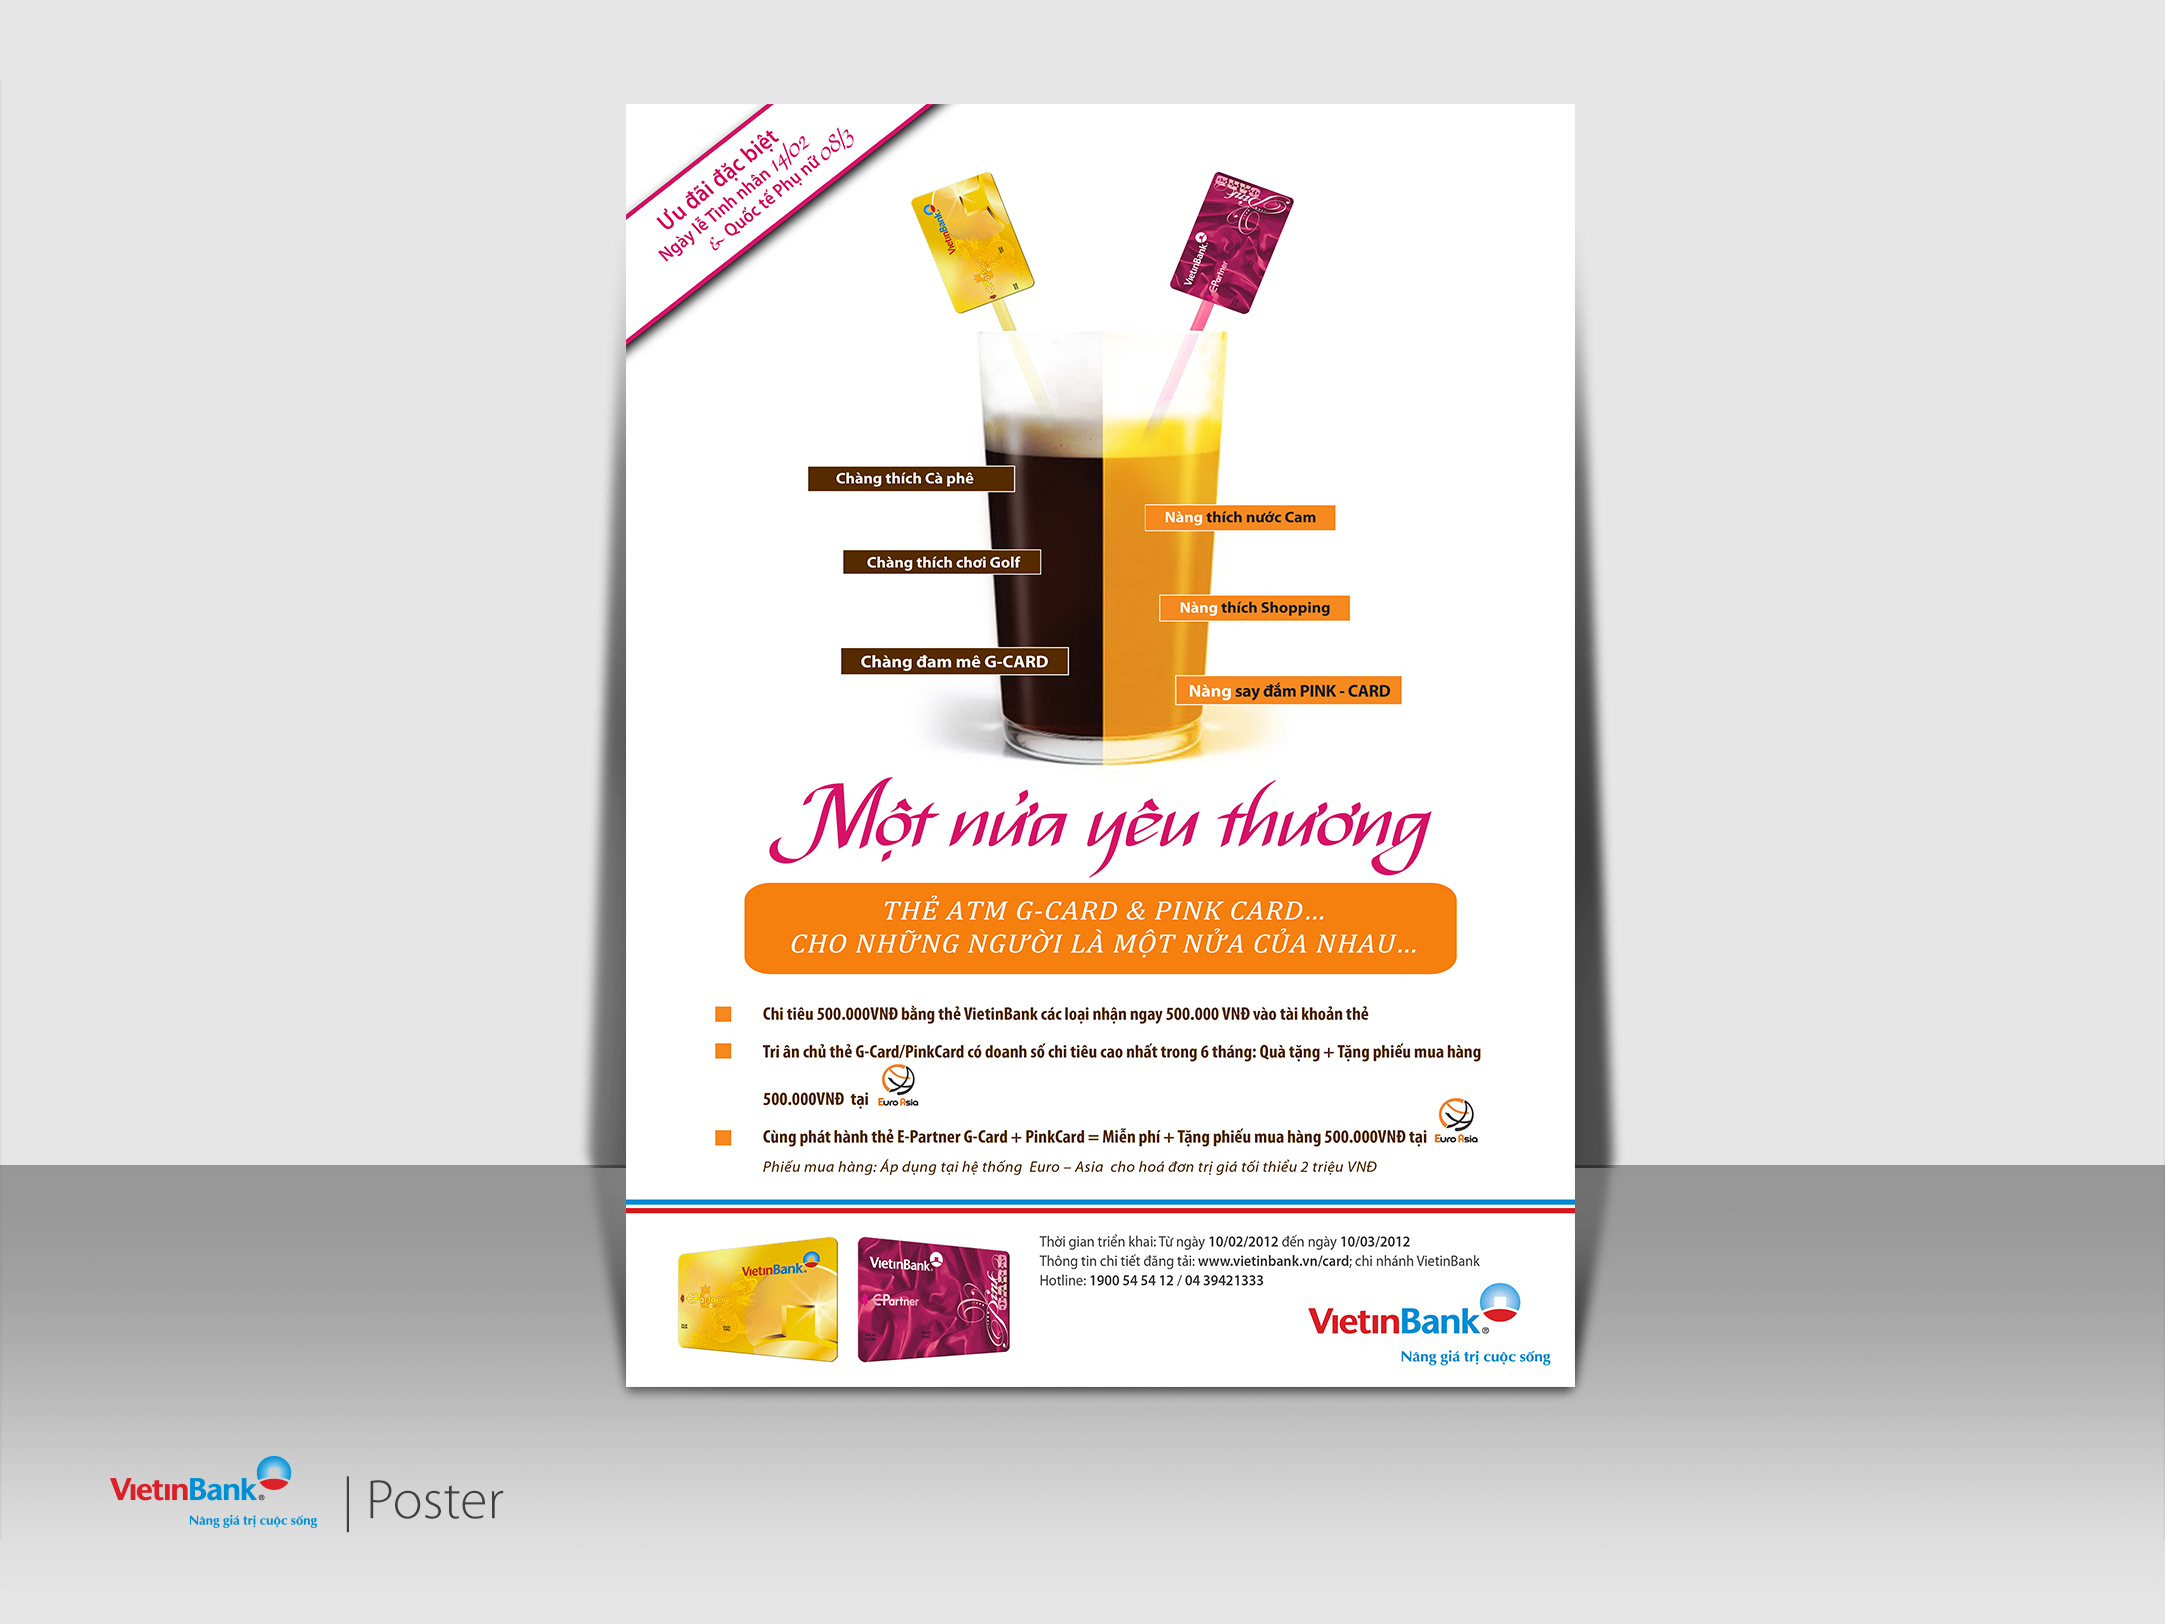 Mẫu thiết kế print ad cho Vietinbank